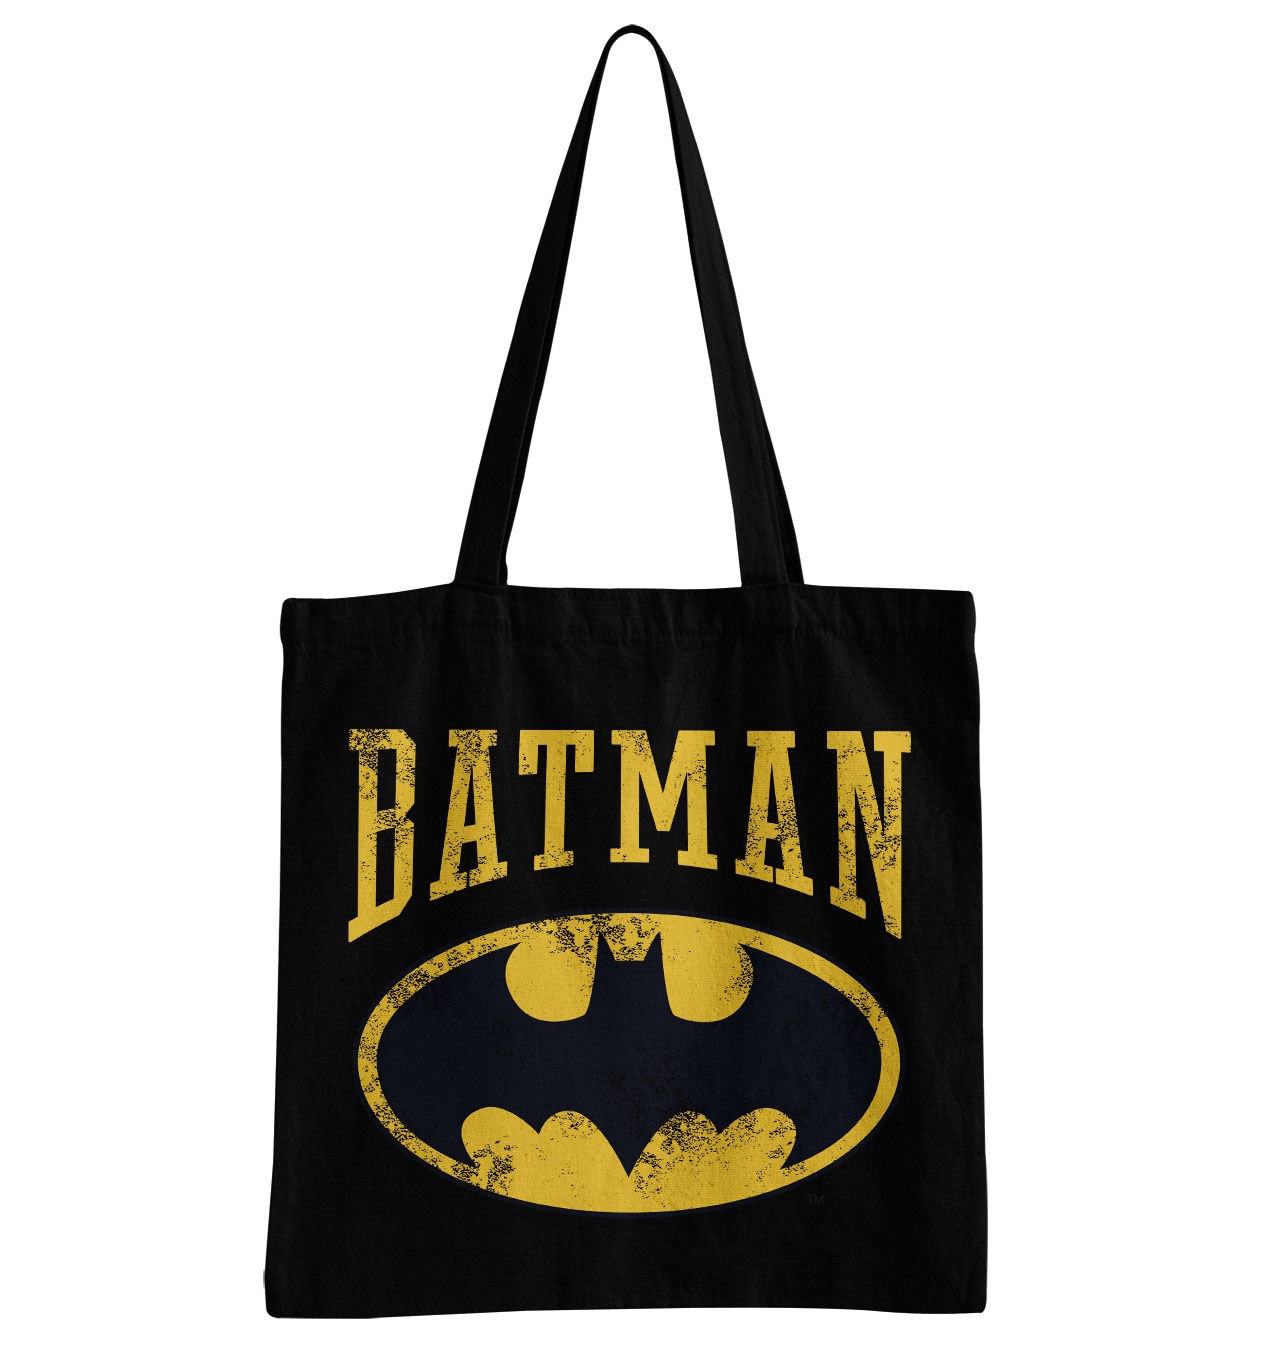 Vintage Batman Tote Bag